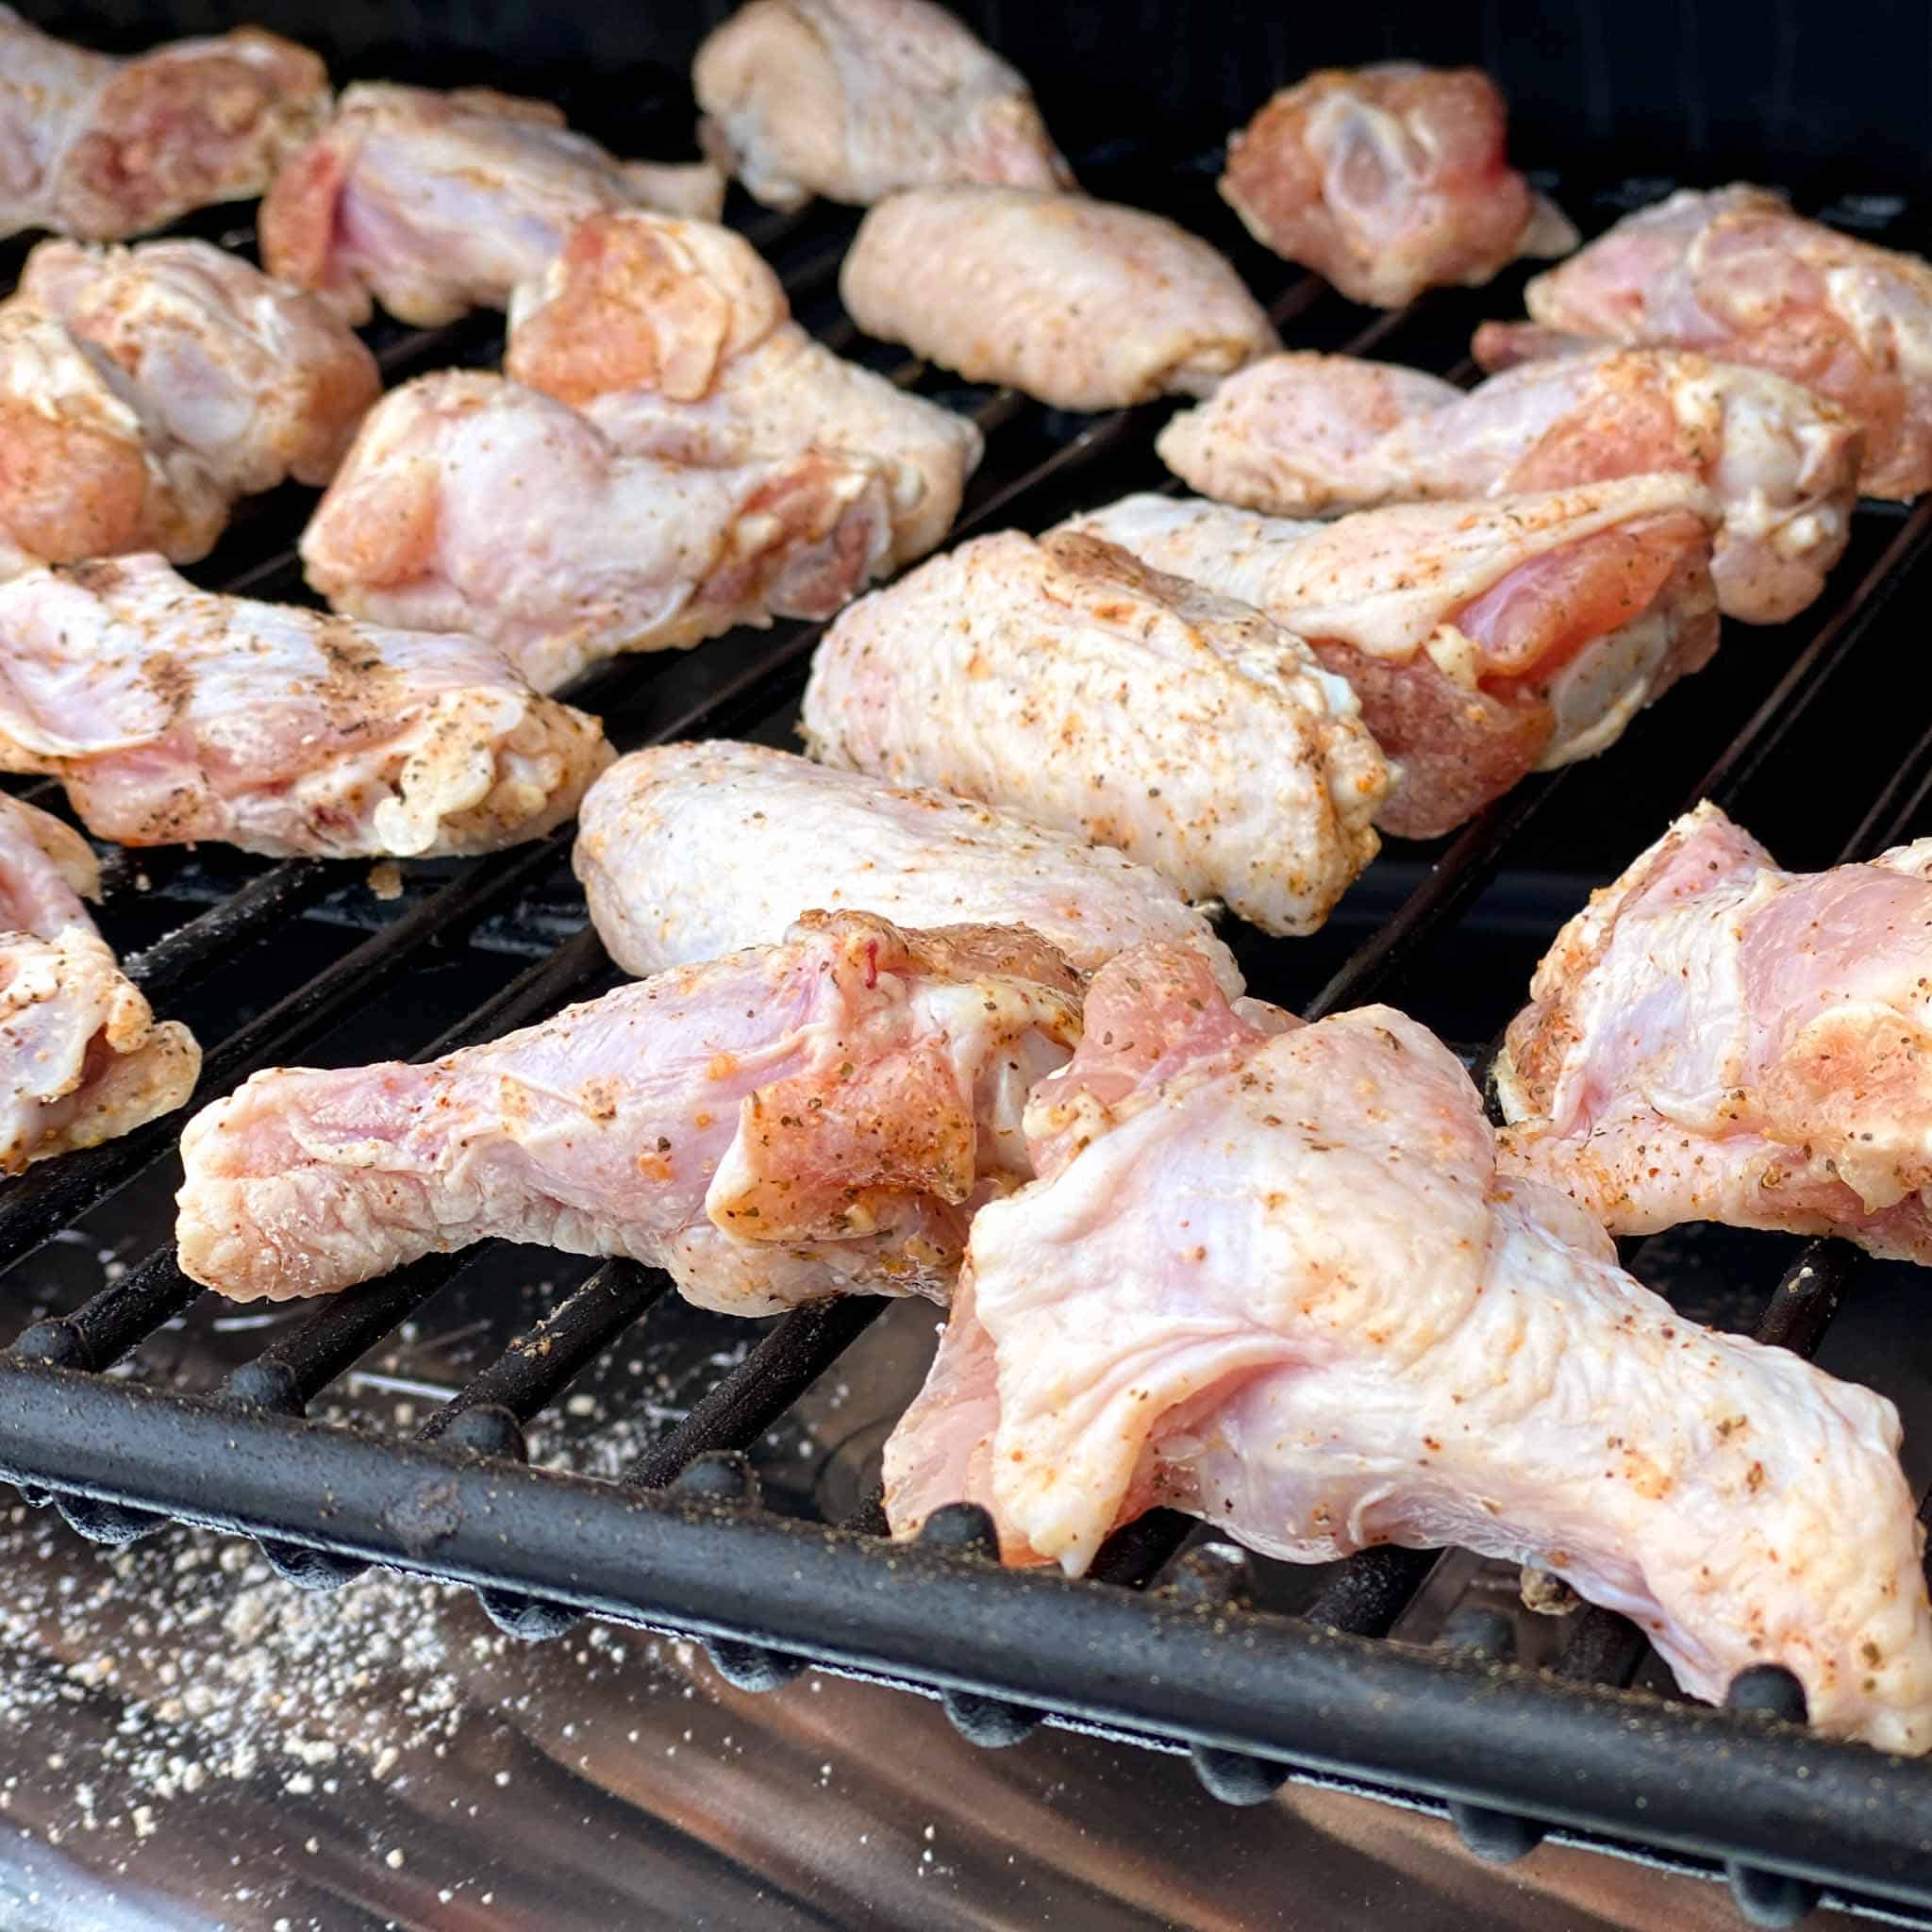 Raw chicken wings on a traeger pellet grill.